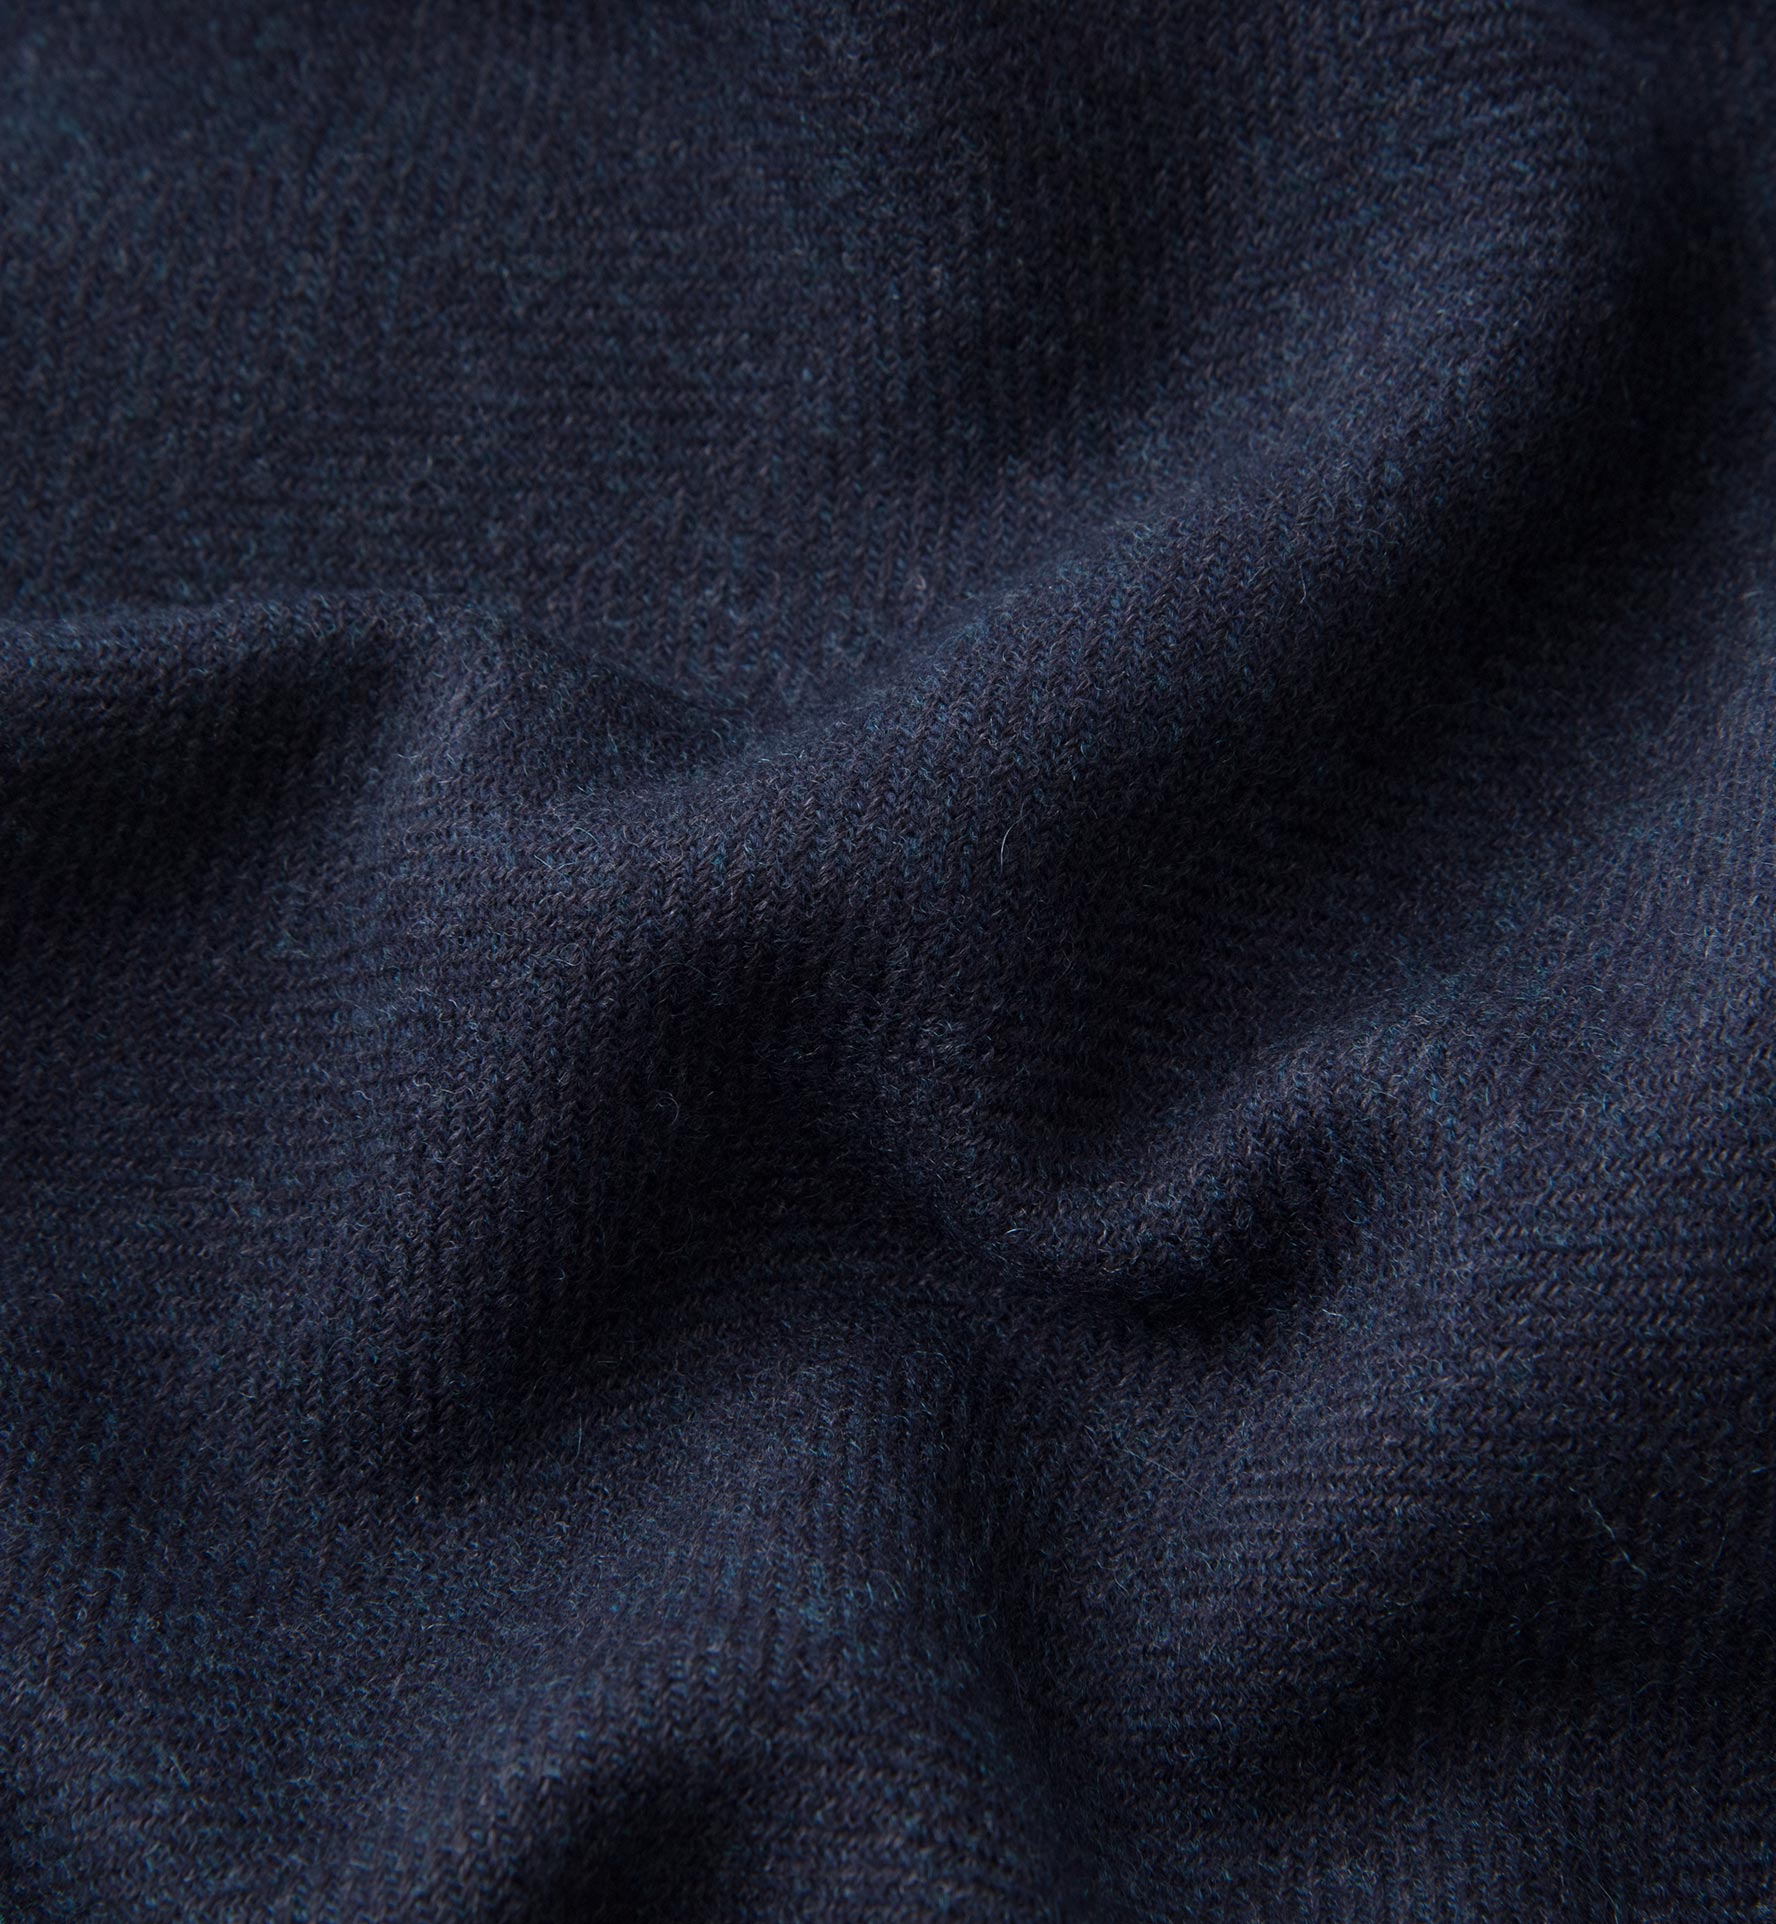 Navy Herringbone Wool Cashmere Scarf by Proper Cloth